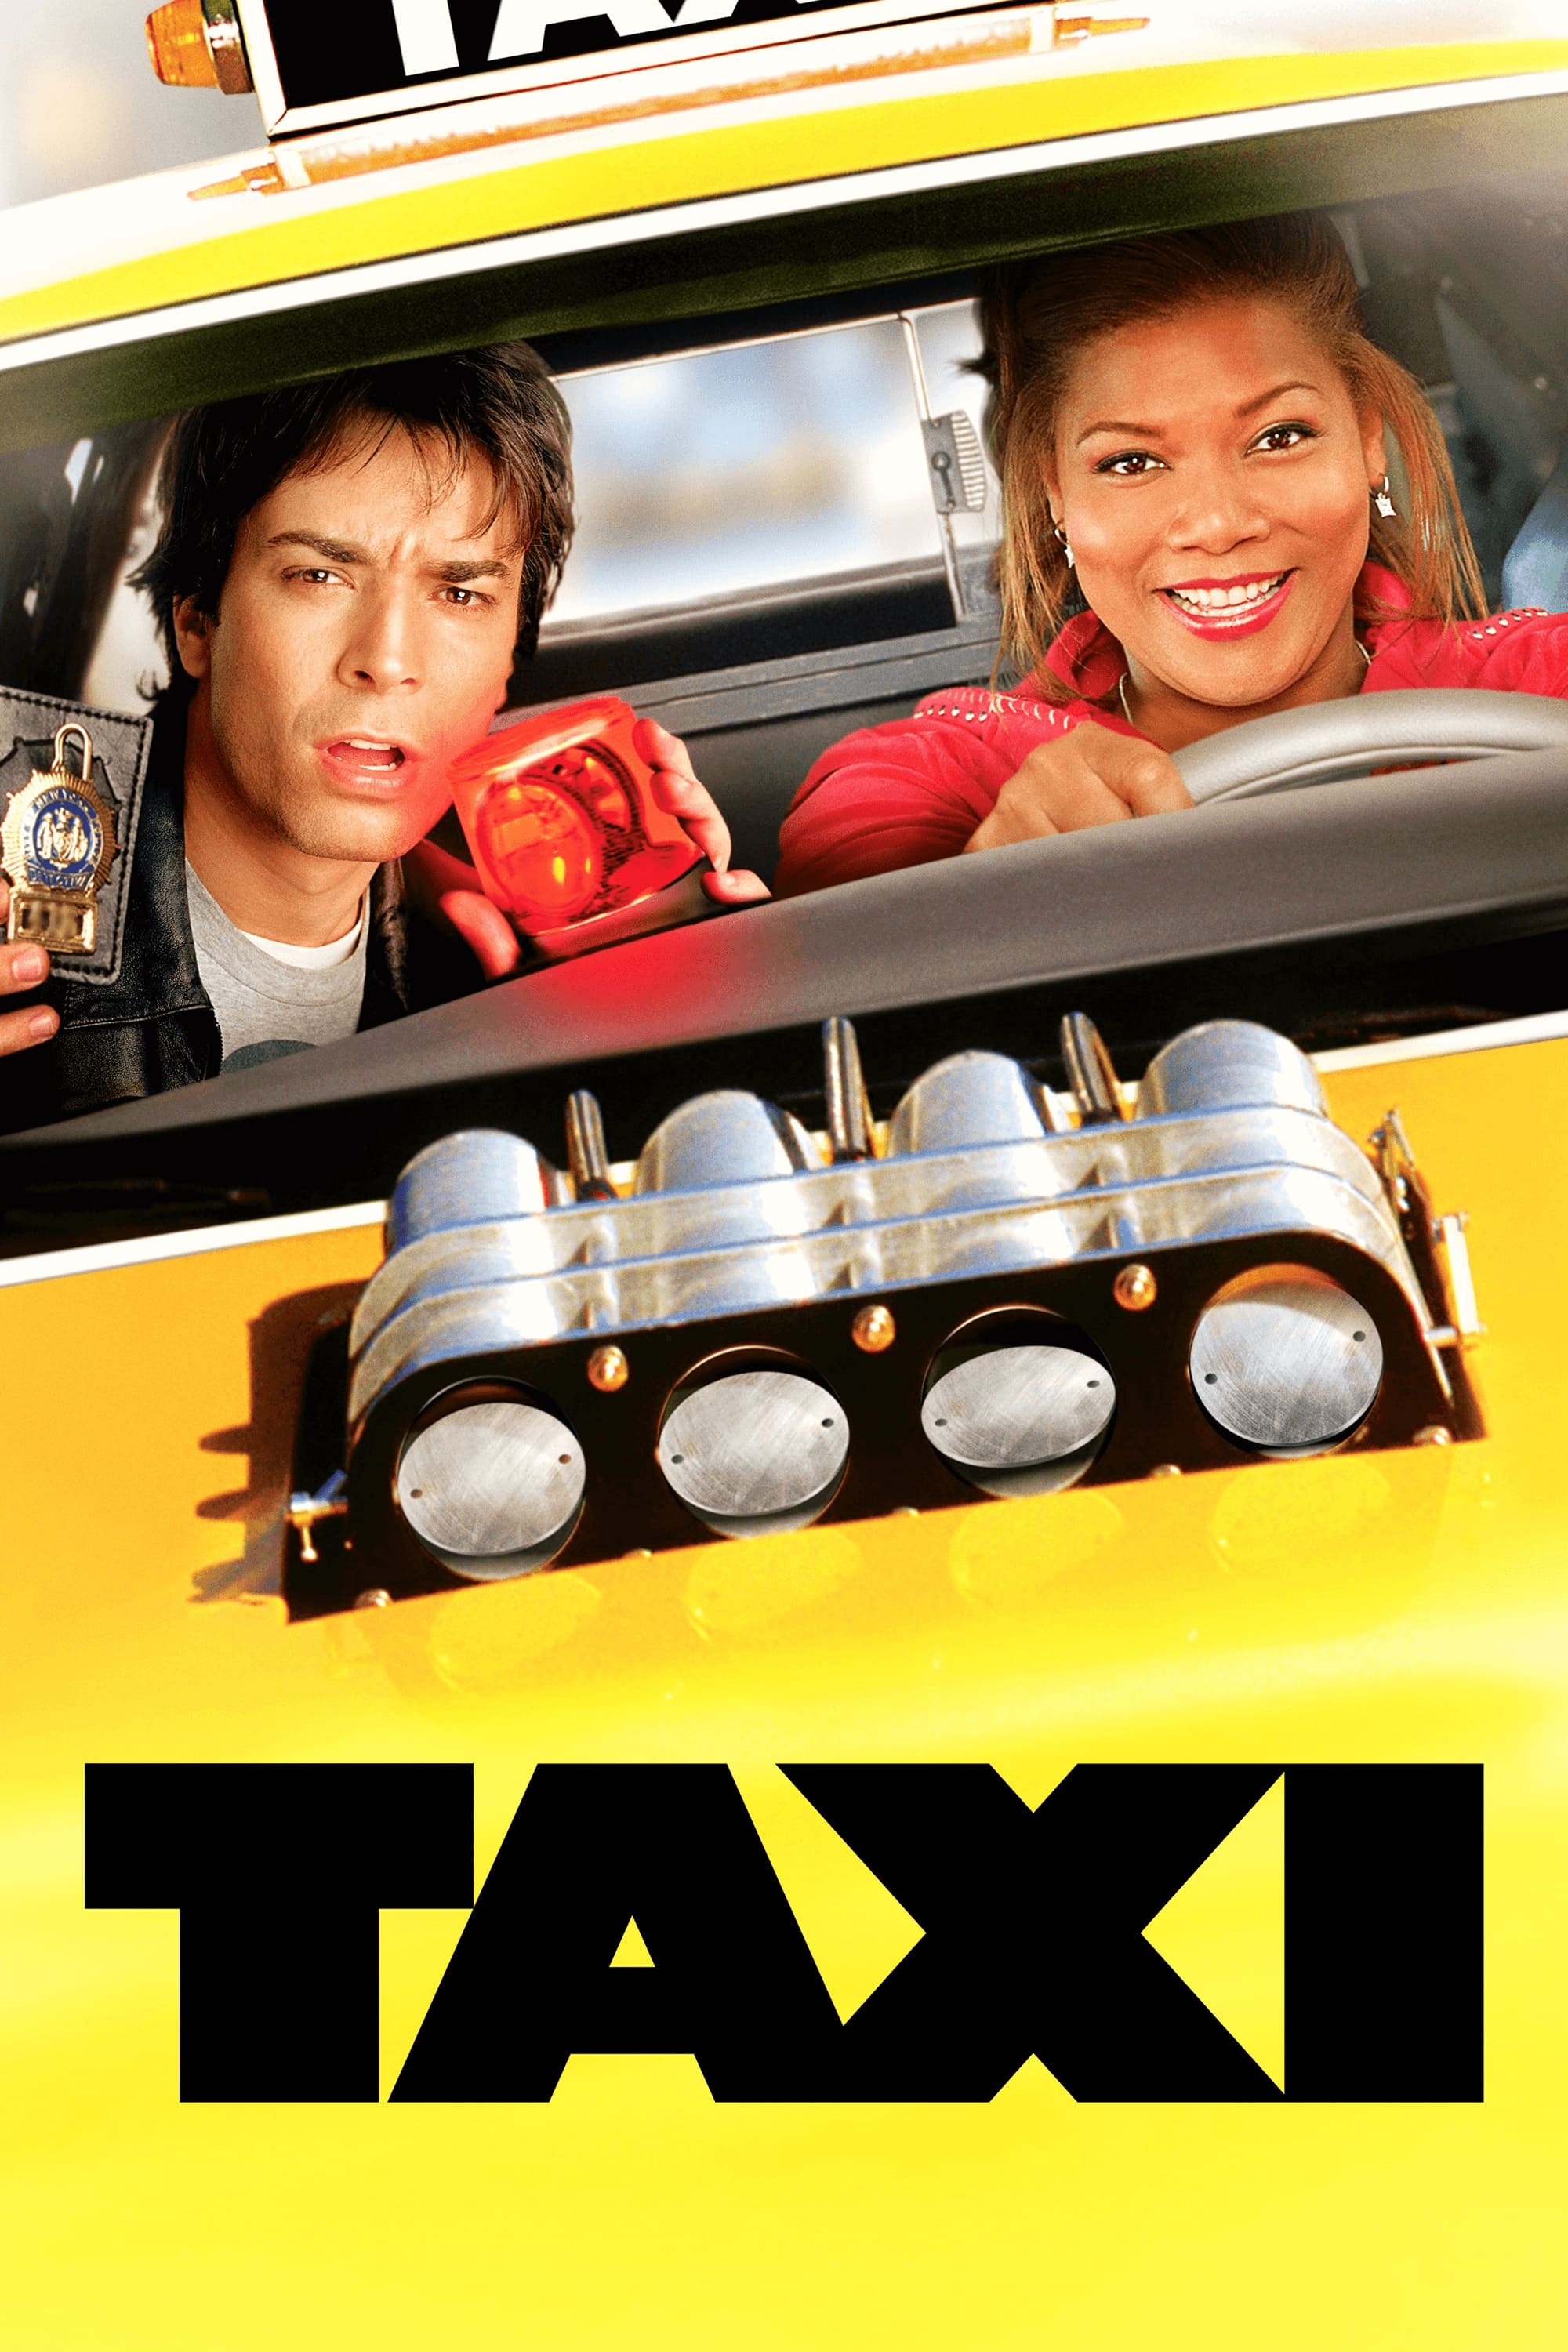 New York Taxi (2004)